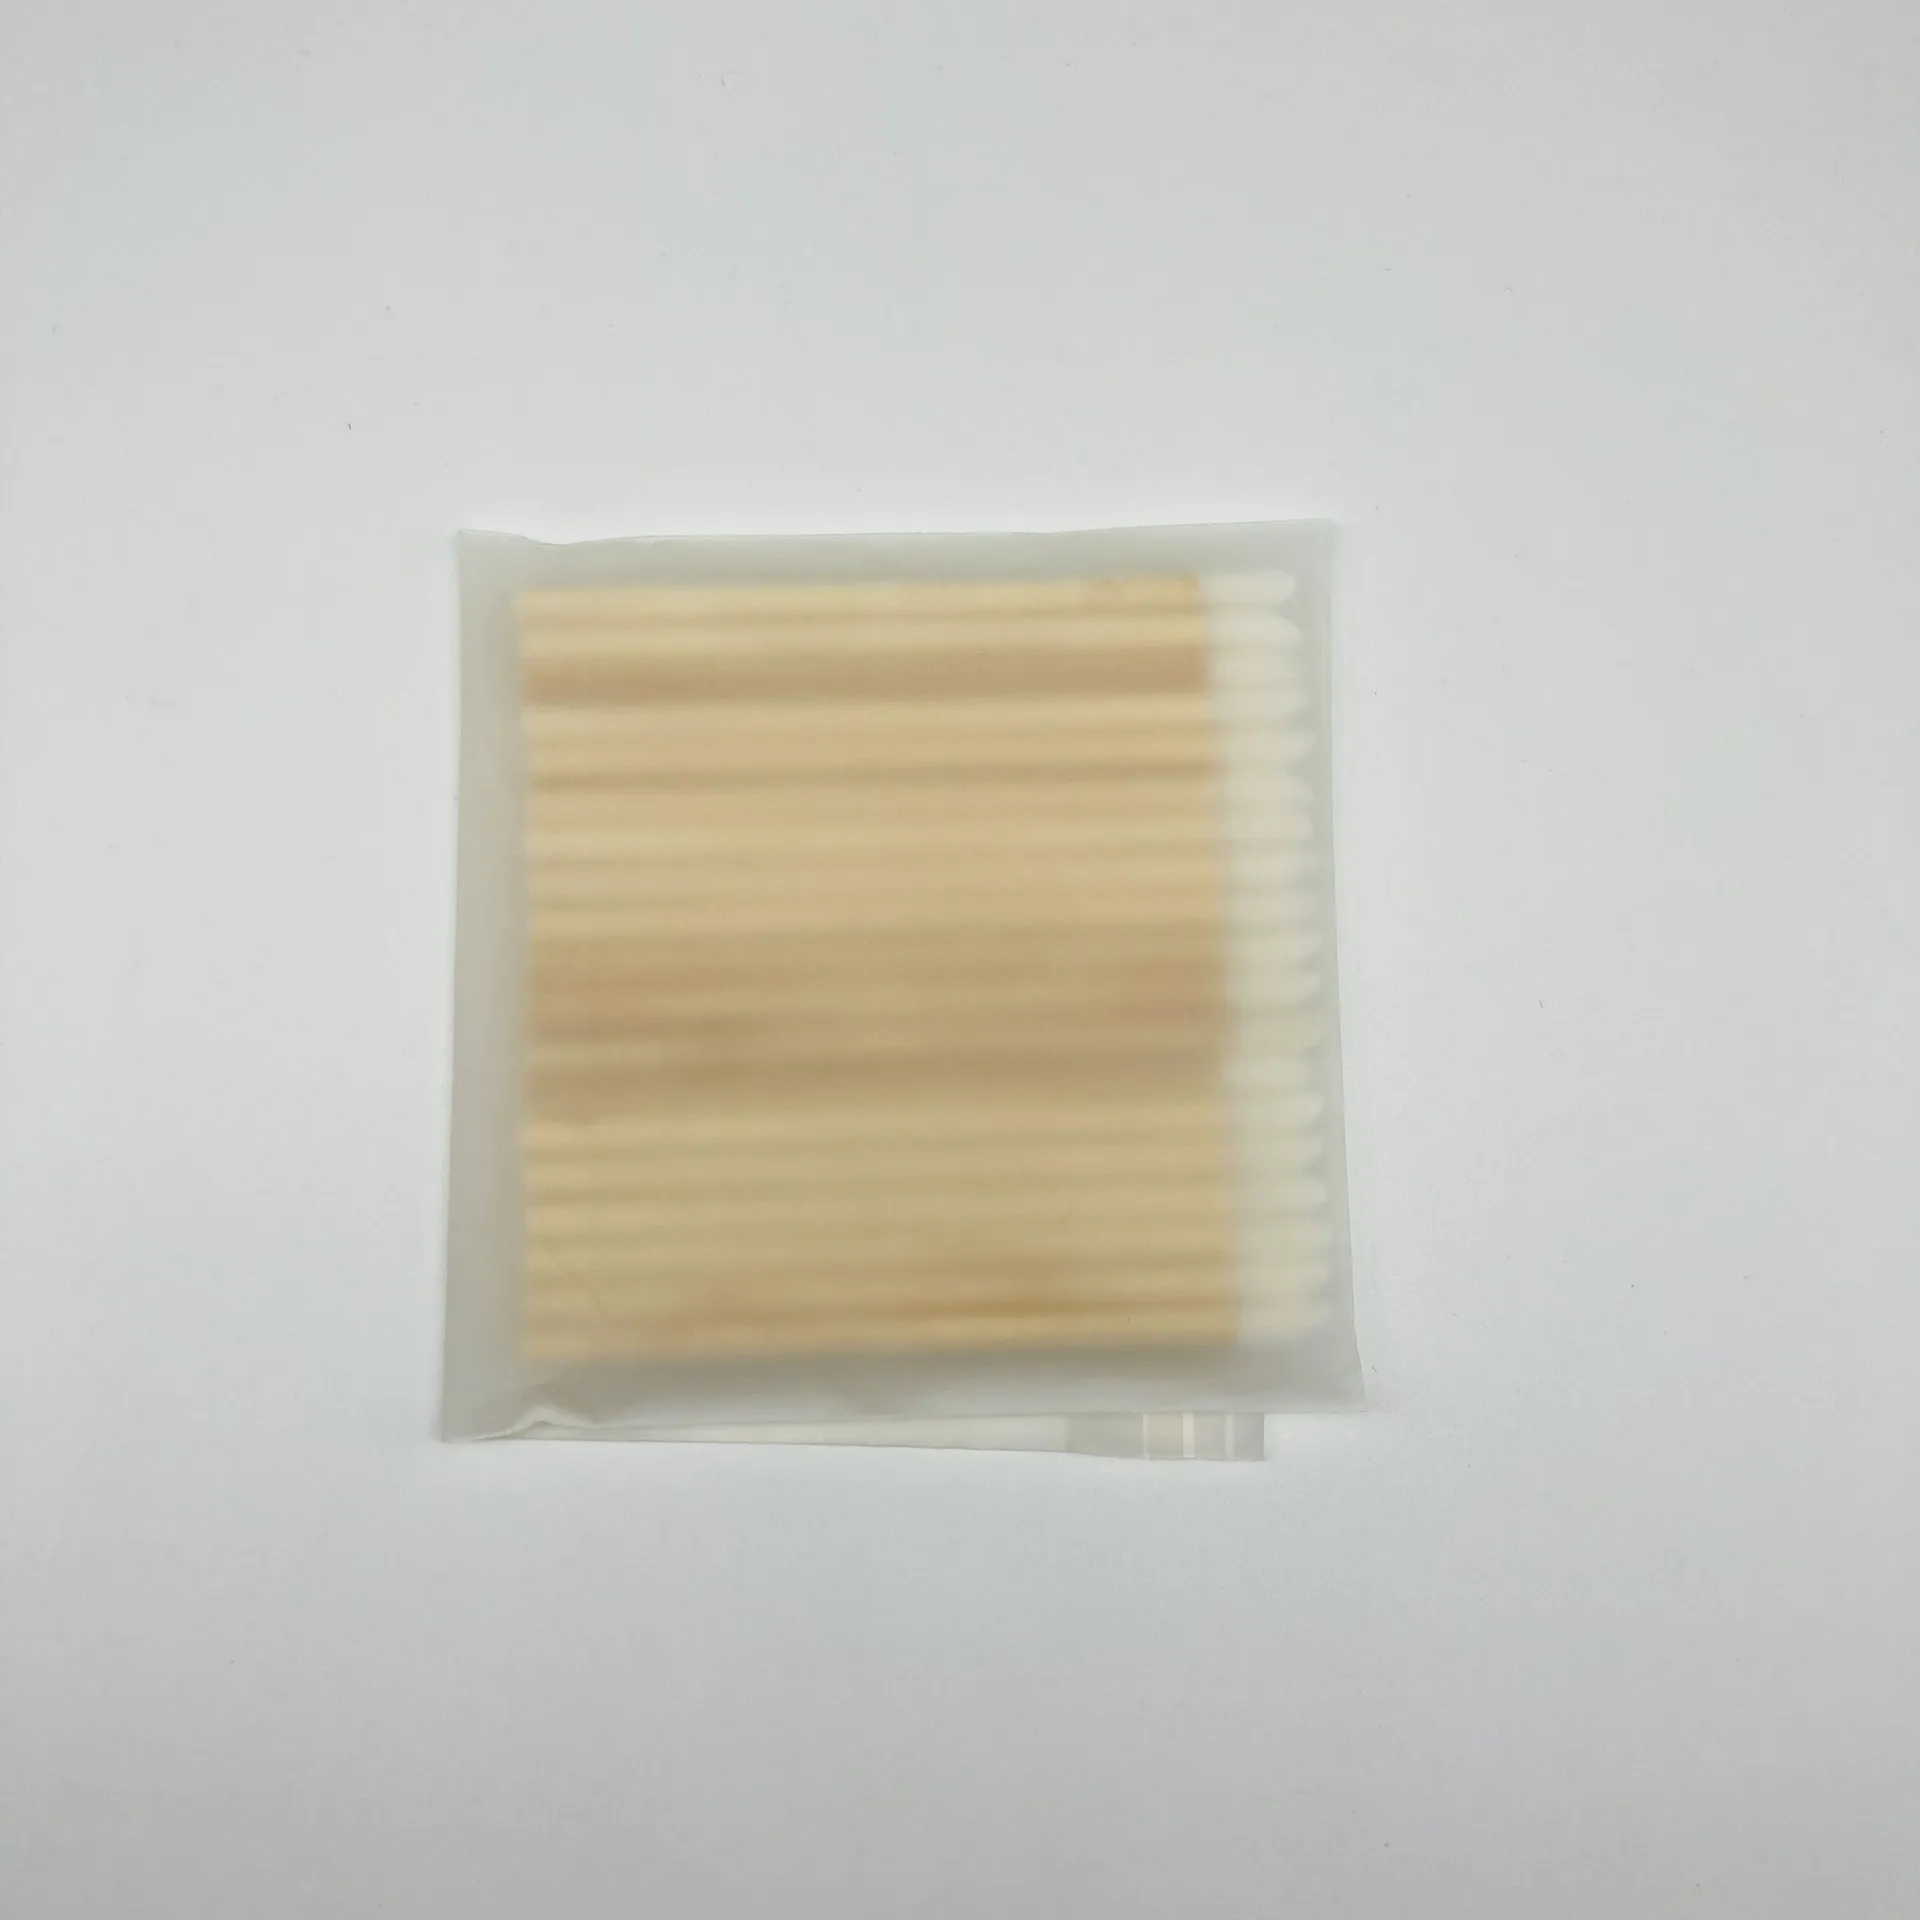 Biodegradable bag packaging eco-friendly disposable applicator bamboo lip brush